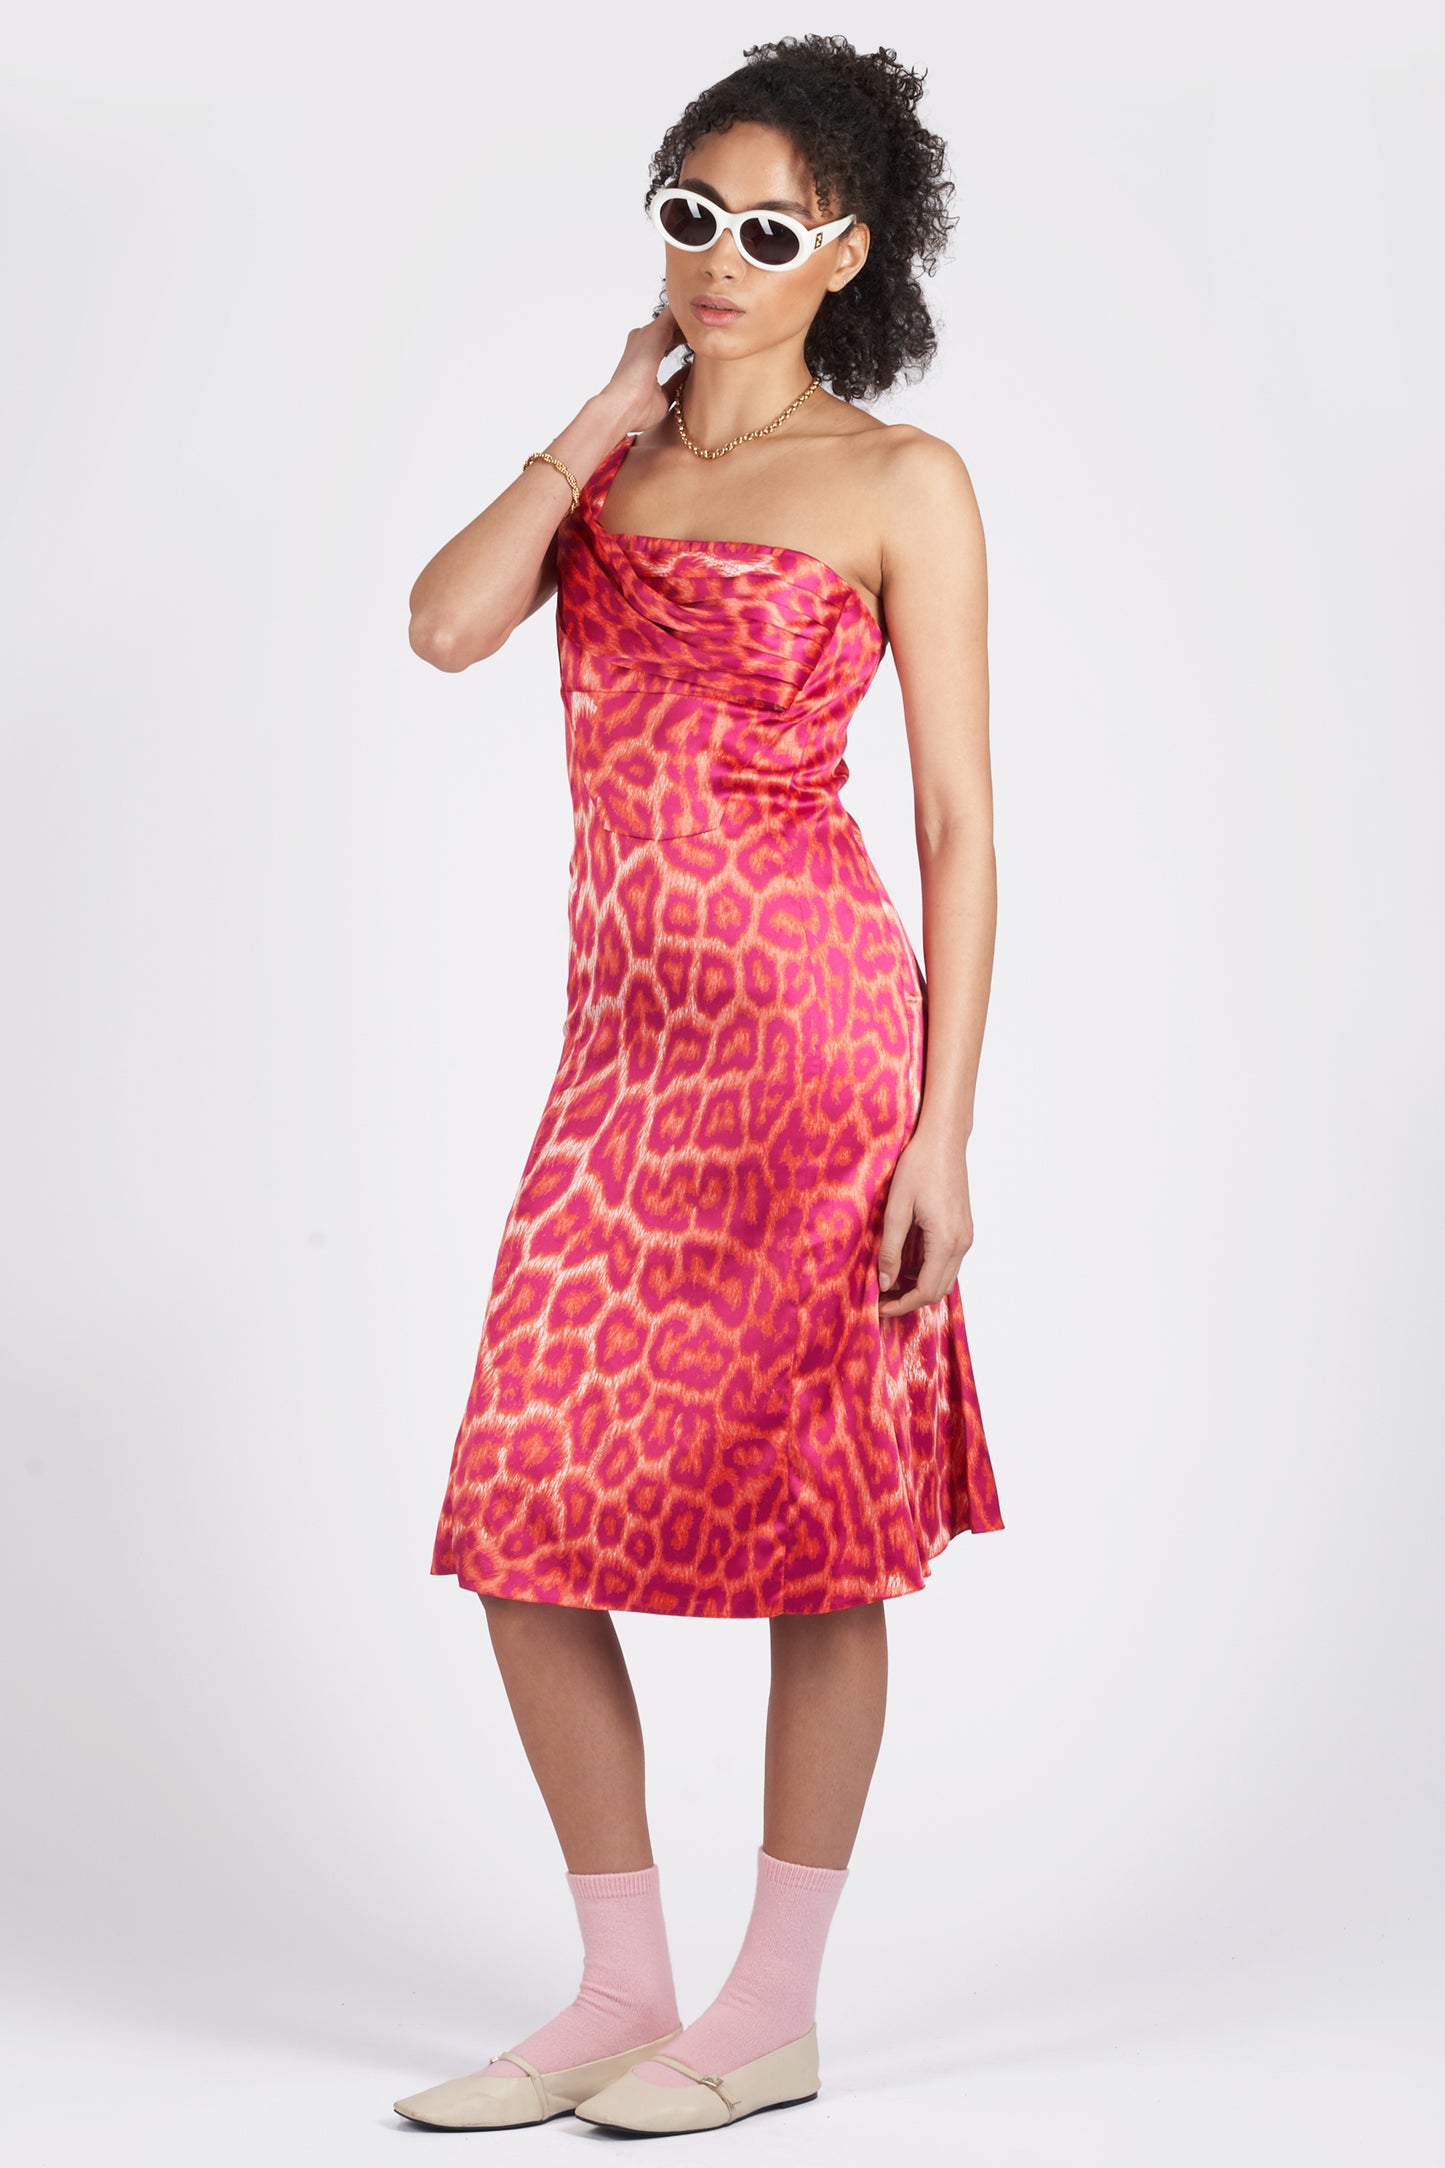 S/S 2008 Leopard Print One Shoulder Dress